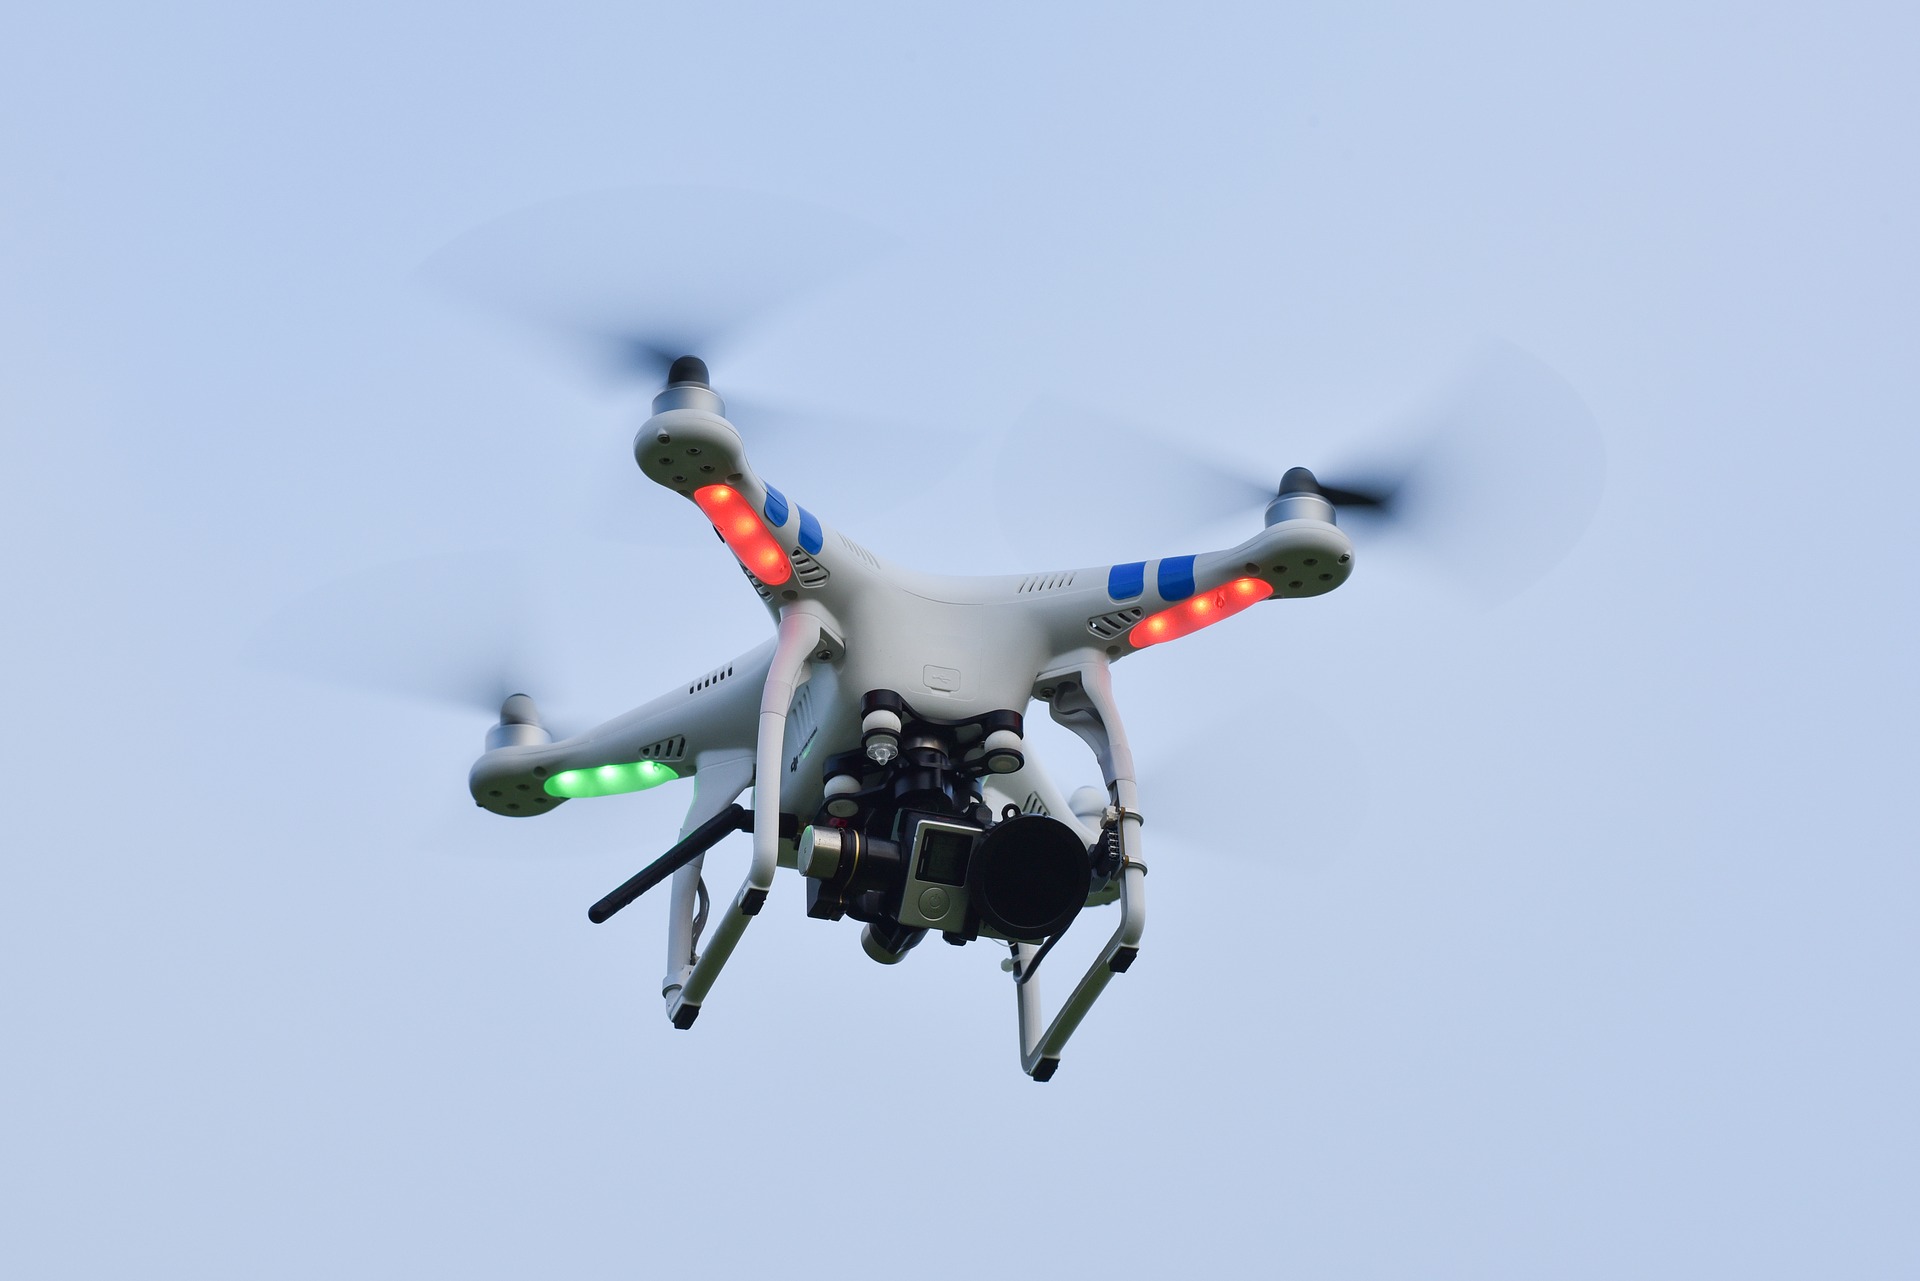 Drone-with-camera-in-flight.jpg